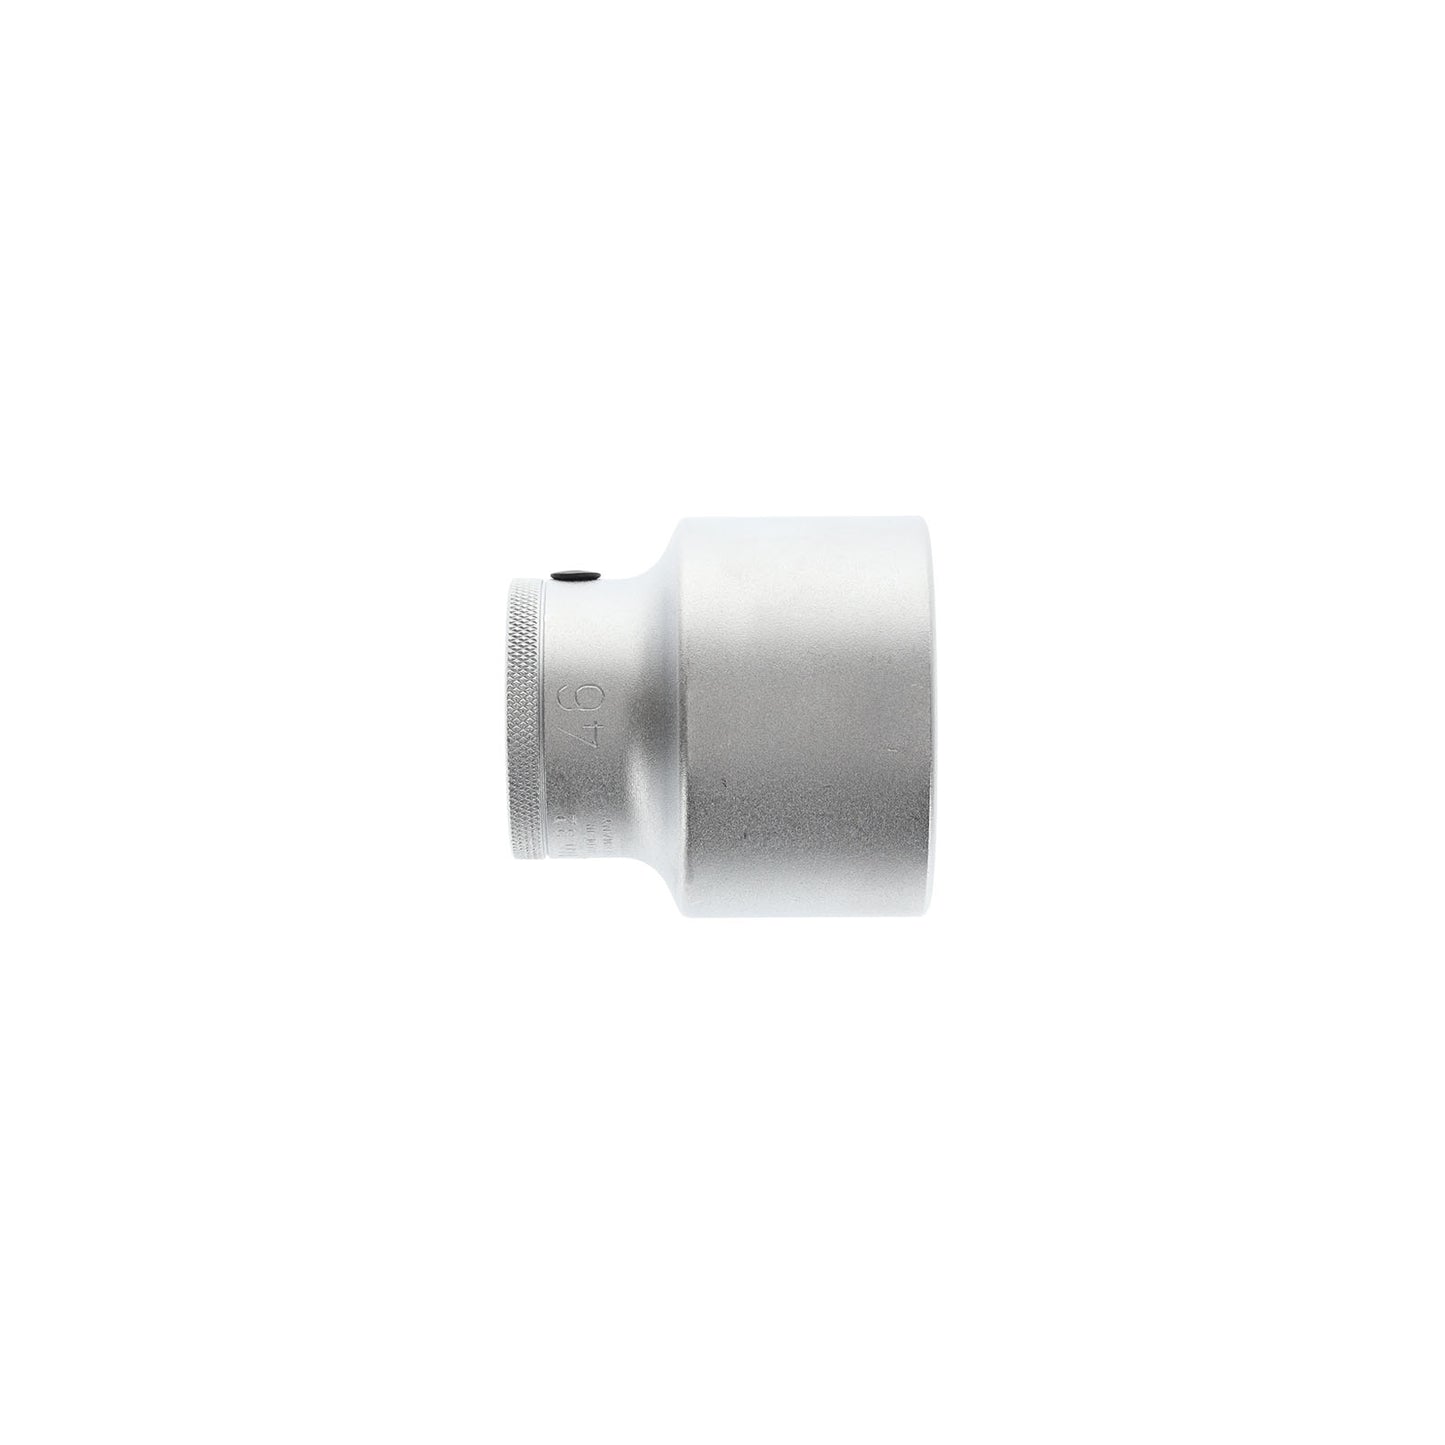 GEDORE 32 46 - Hexagonal socket 3/4", 46 mm (6271270)